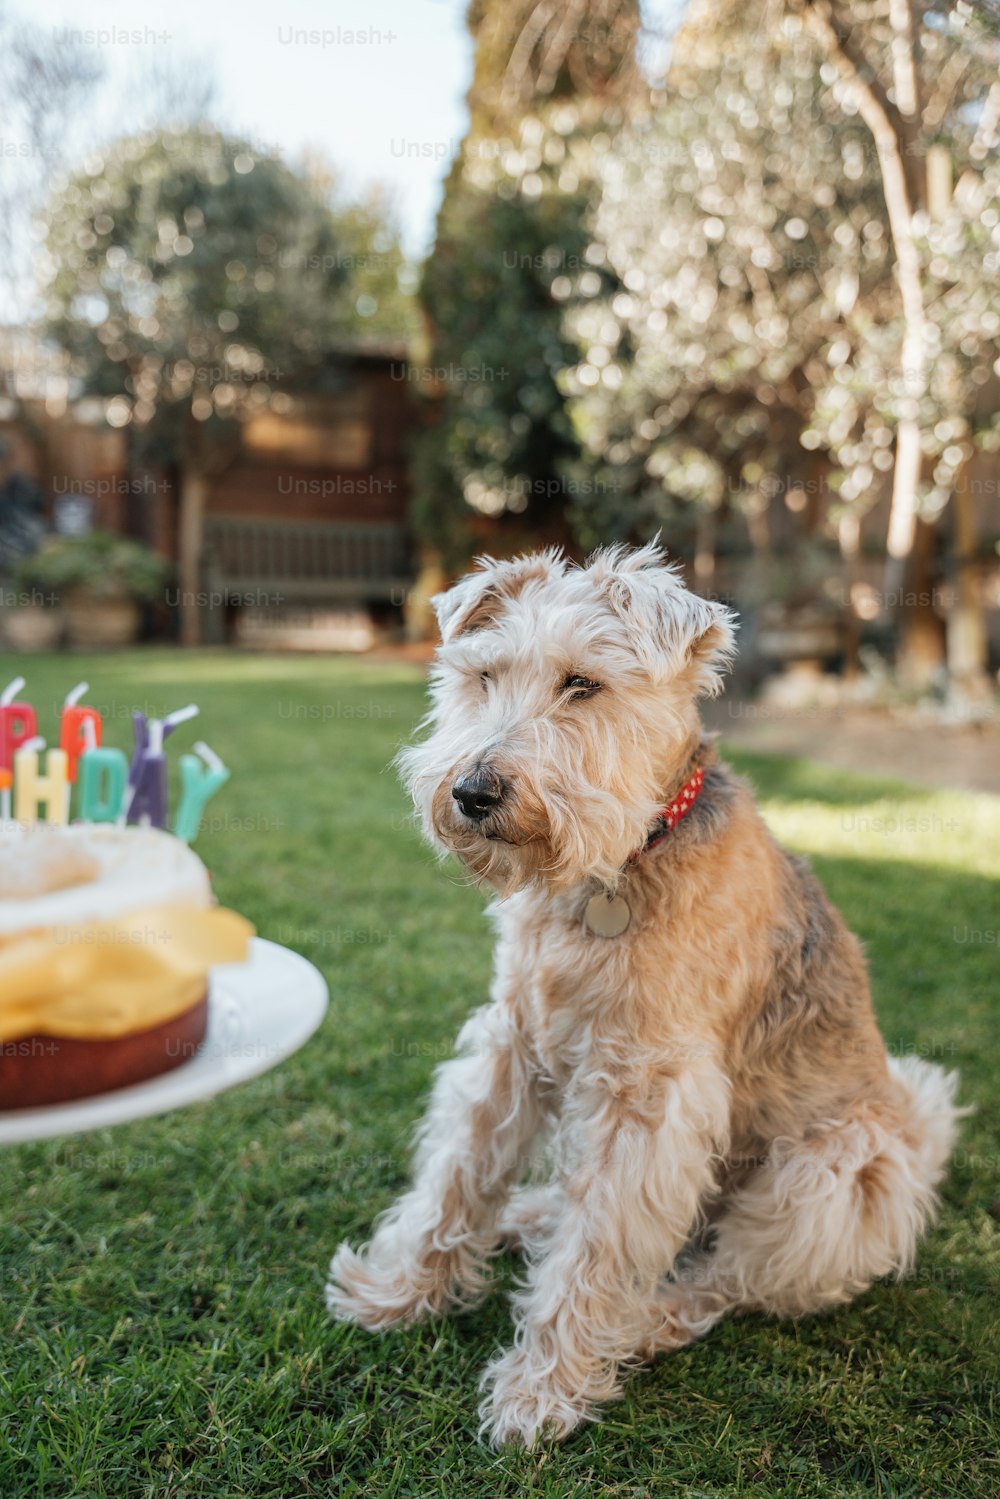 a dog sitting in the grass near a birthday cake